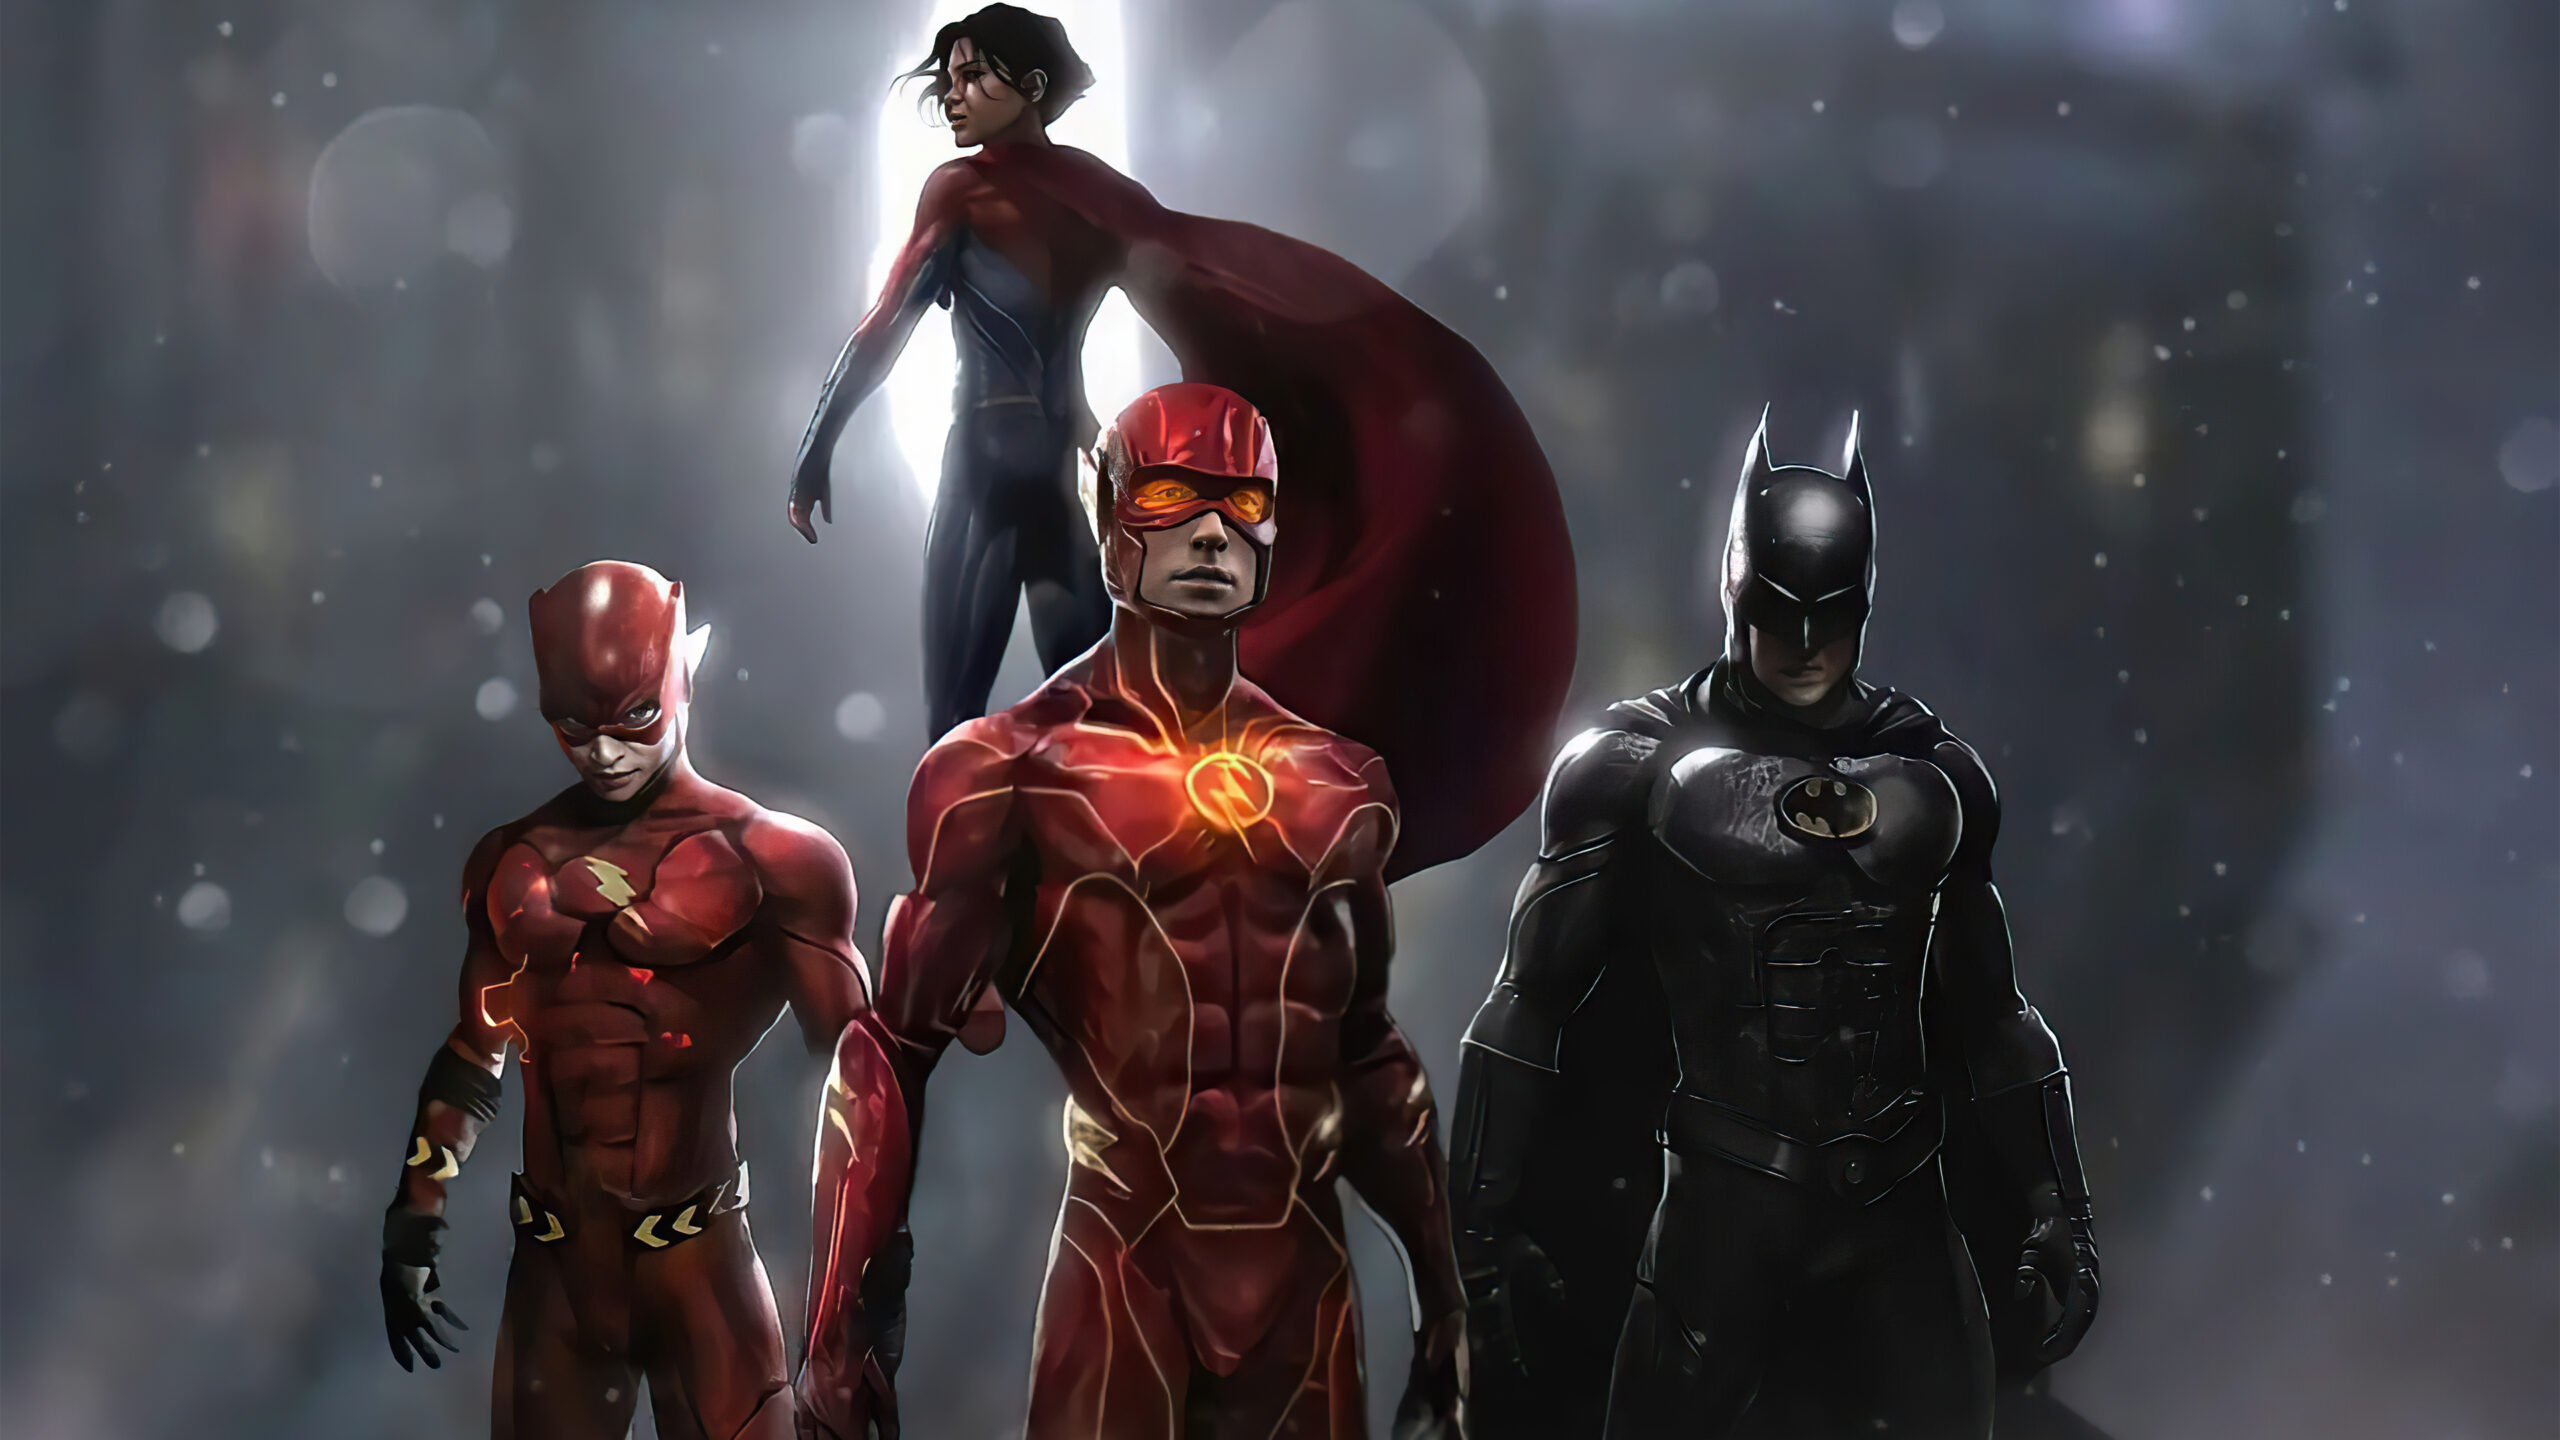 The Flash: Director Spoils surprise Nicolas Cage superman cameo